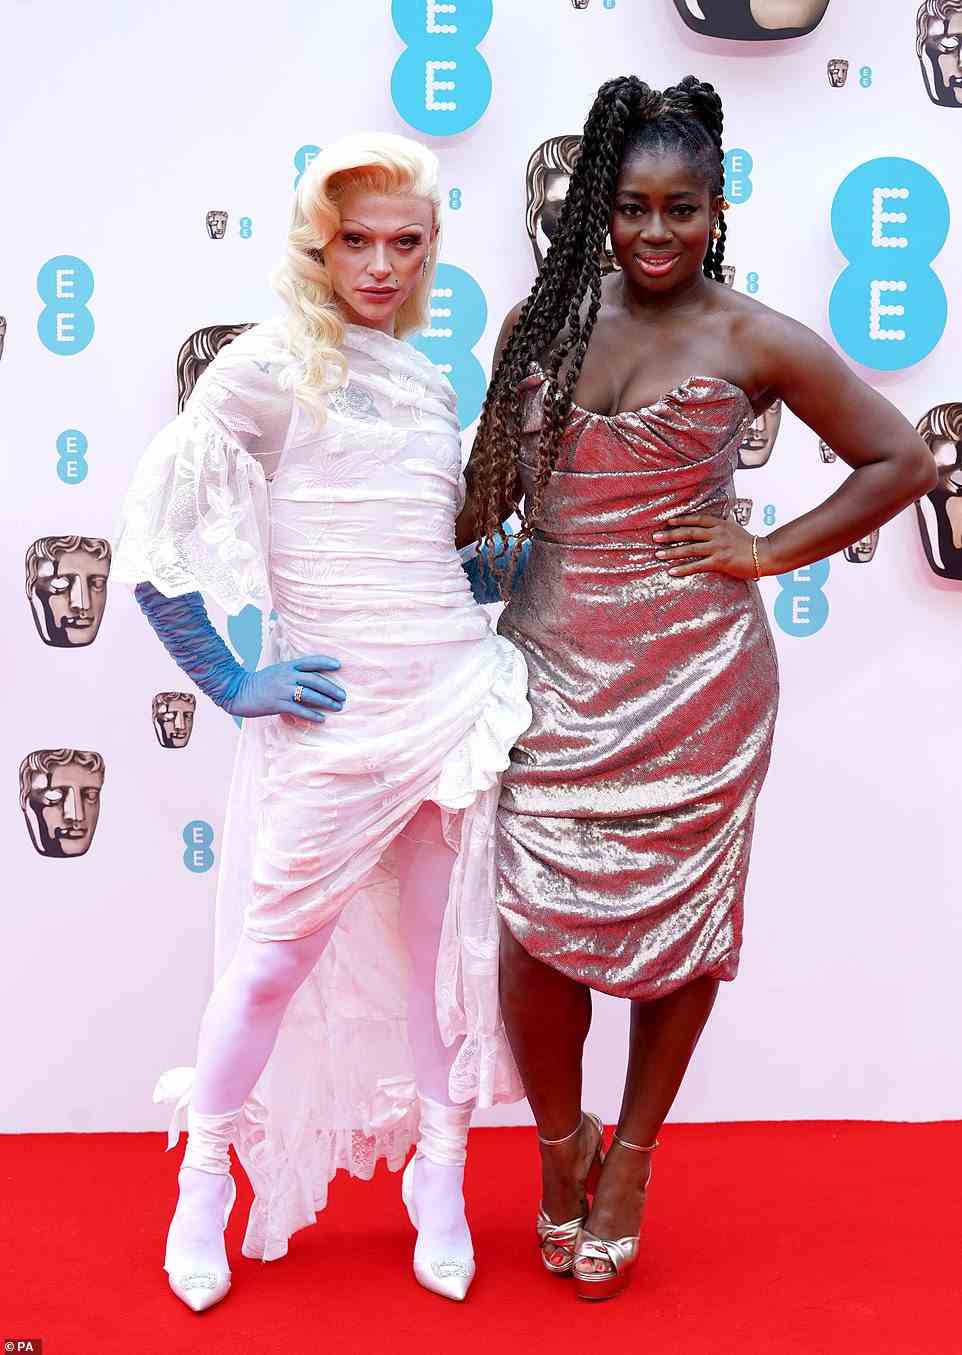 Striking a pose: TV presenter Clara put on a sensational display alongside drag queen Bimini Bon Boulash